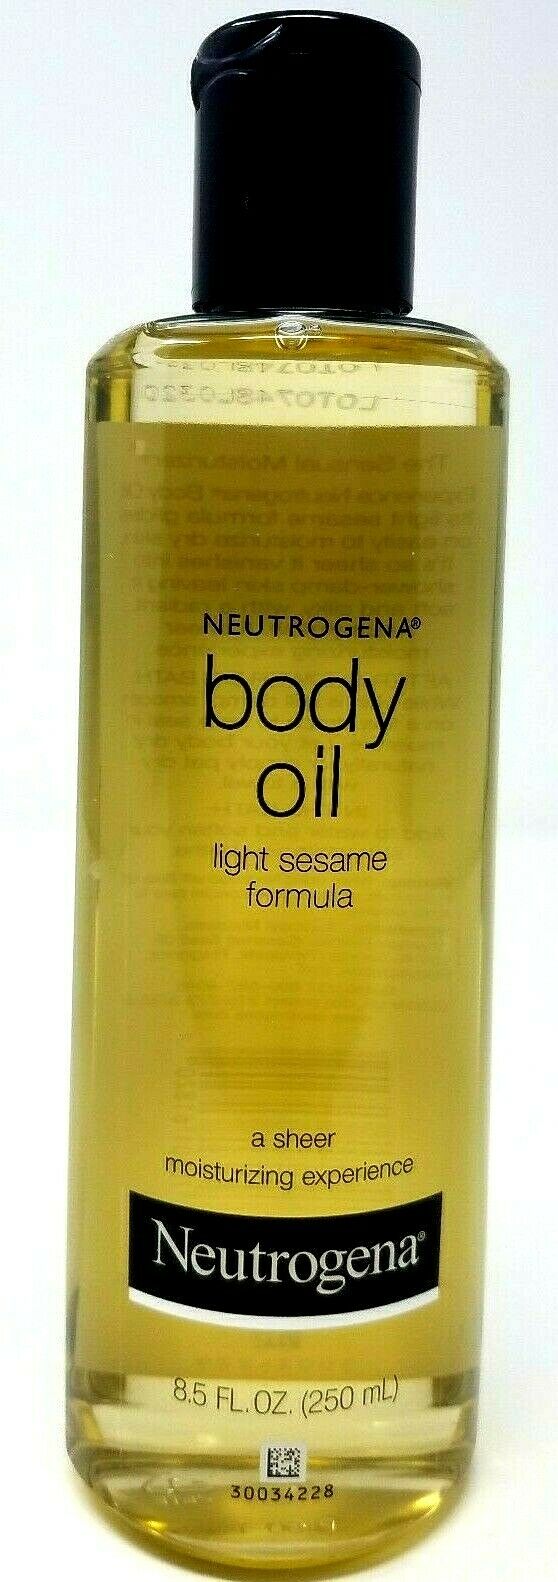 Neutrogena Body Oil Light Sesame Formula 8.5 Fl. Oz